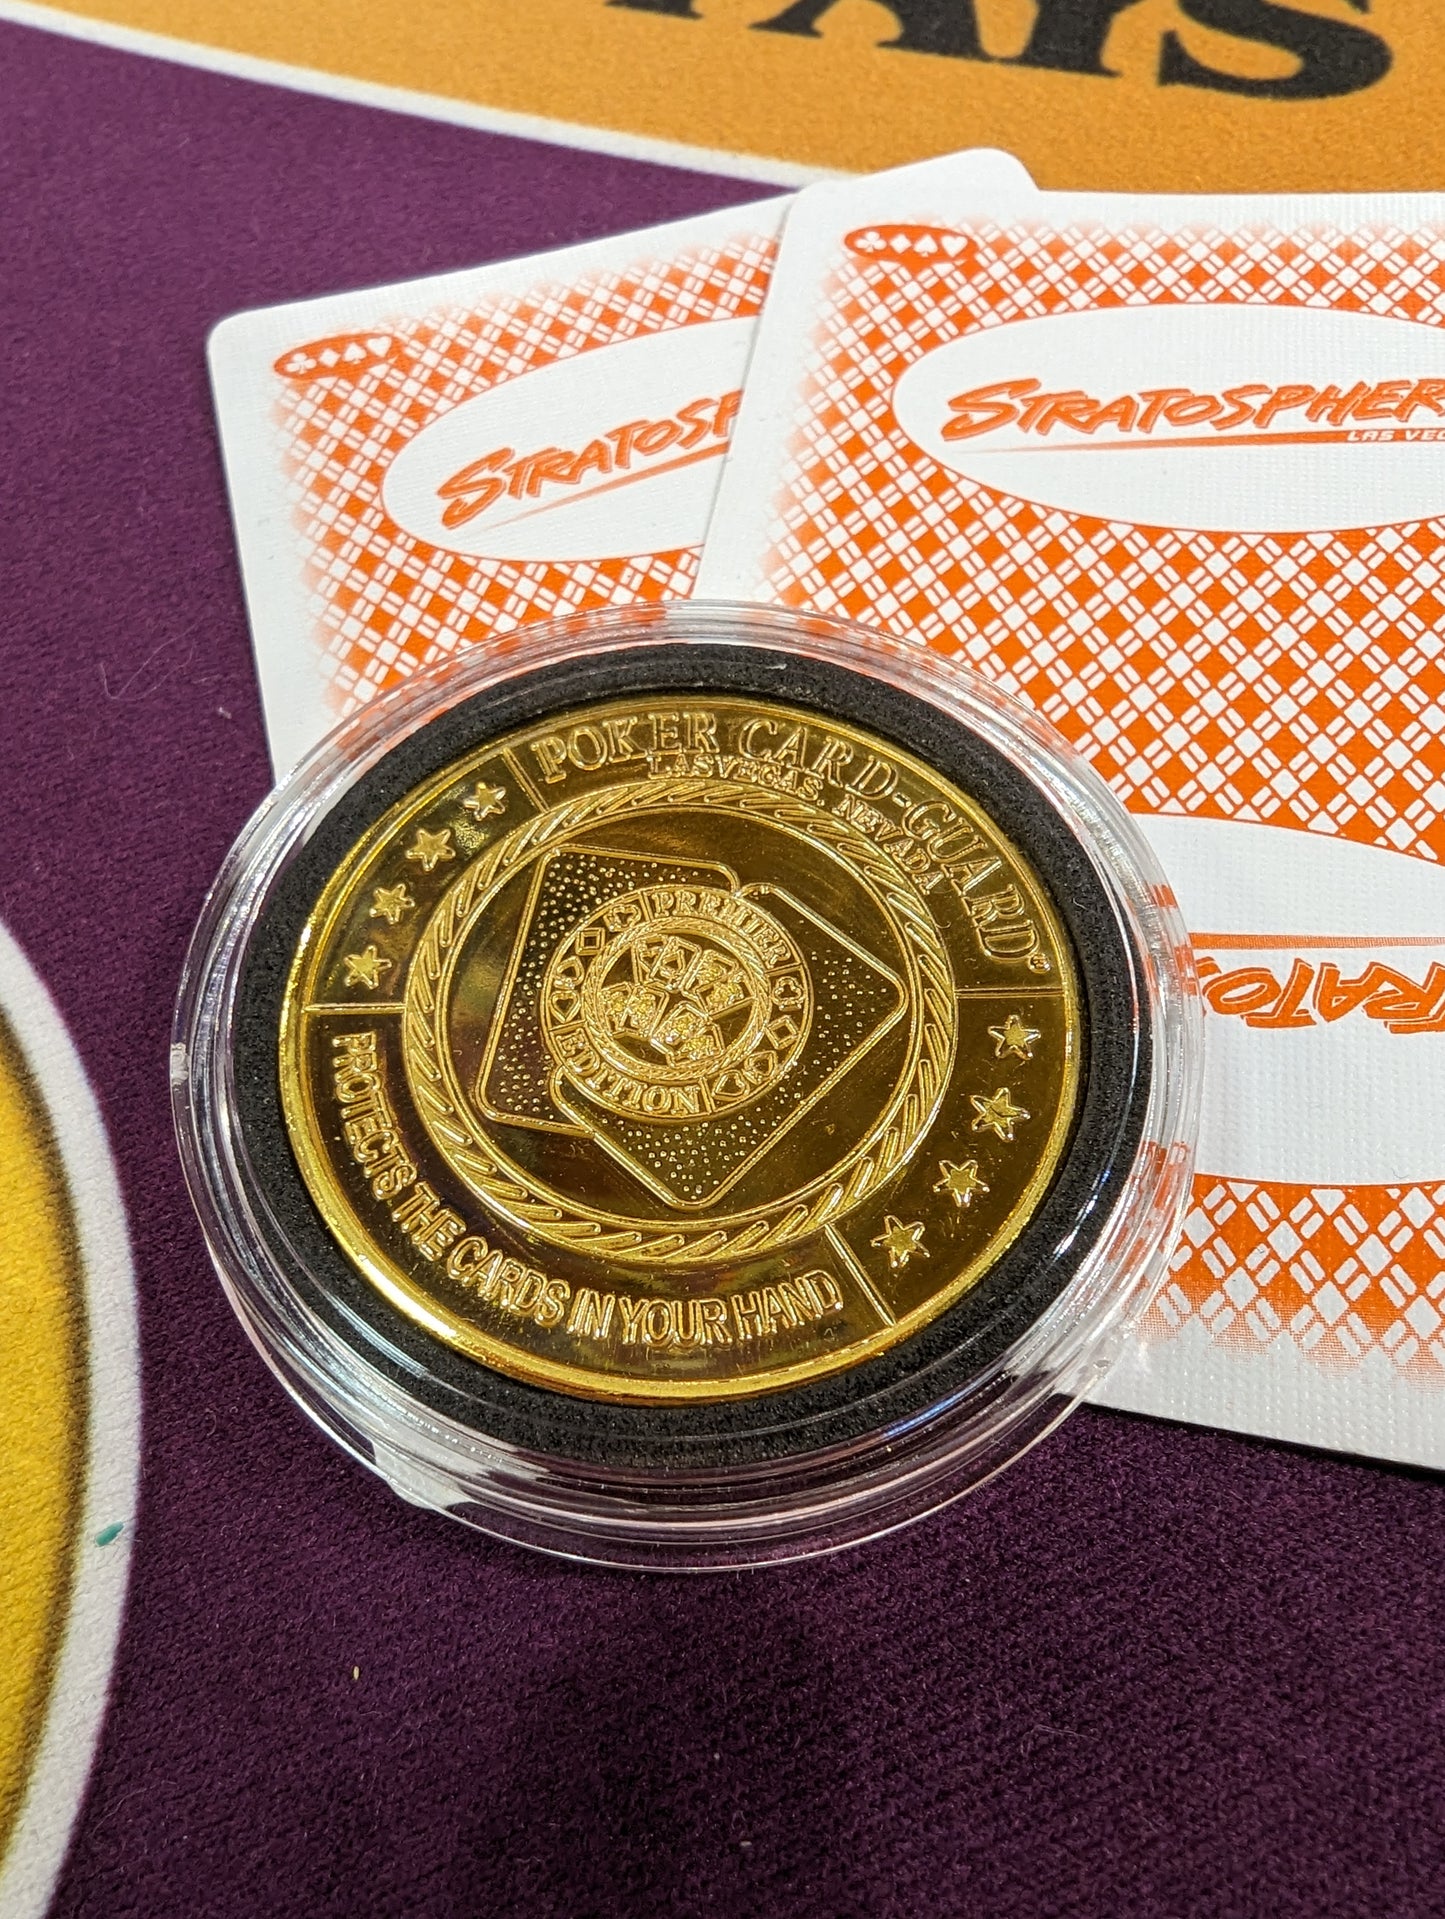 The Ducks Quack Poker Coin